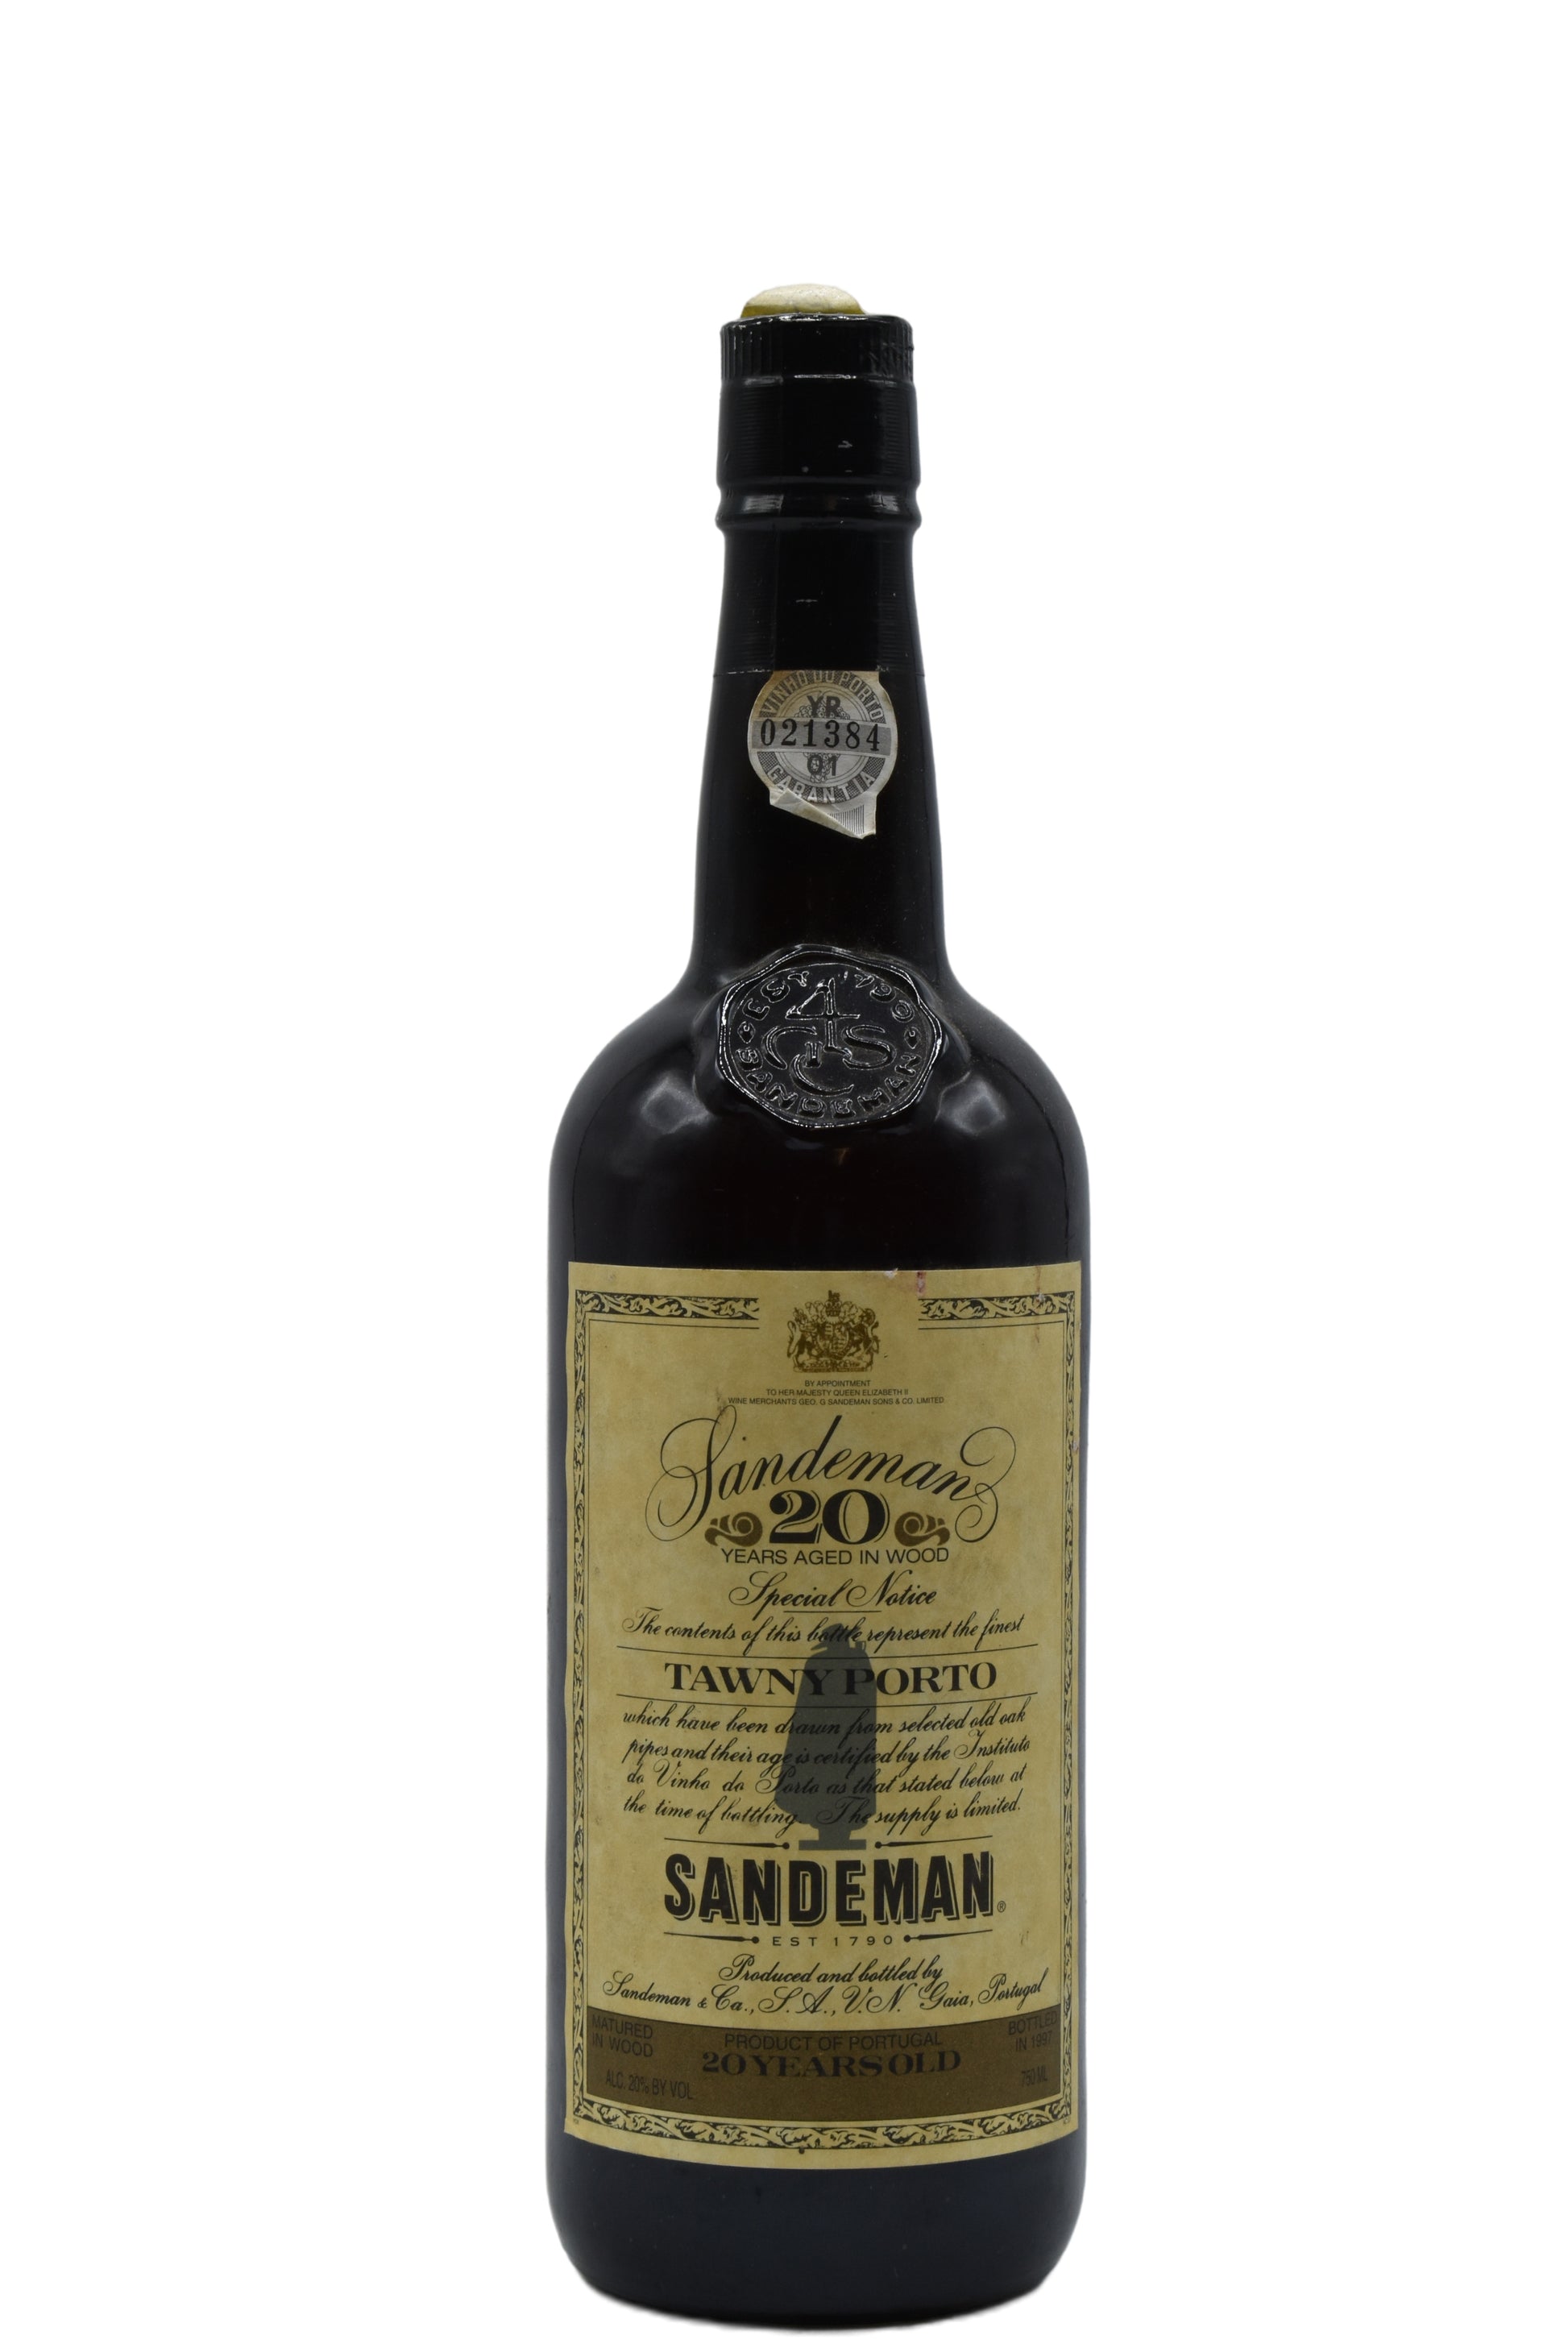 NV Sandeman Porto 20 Year Old Tawny 750ml - Walker Wine Co.